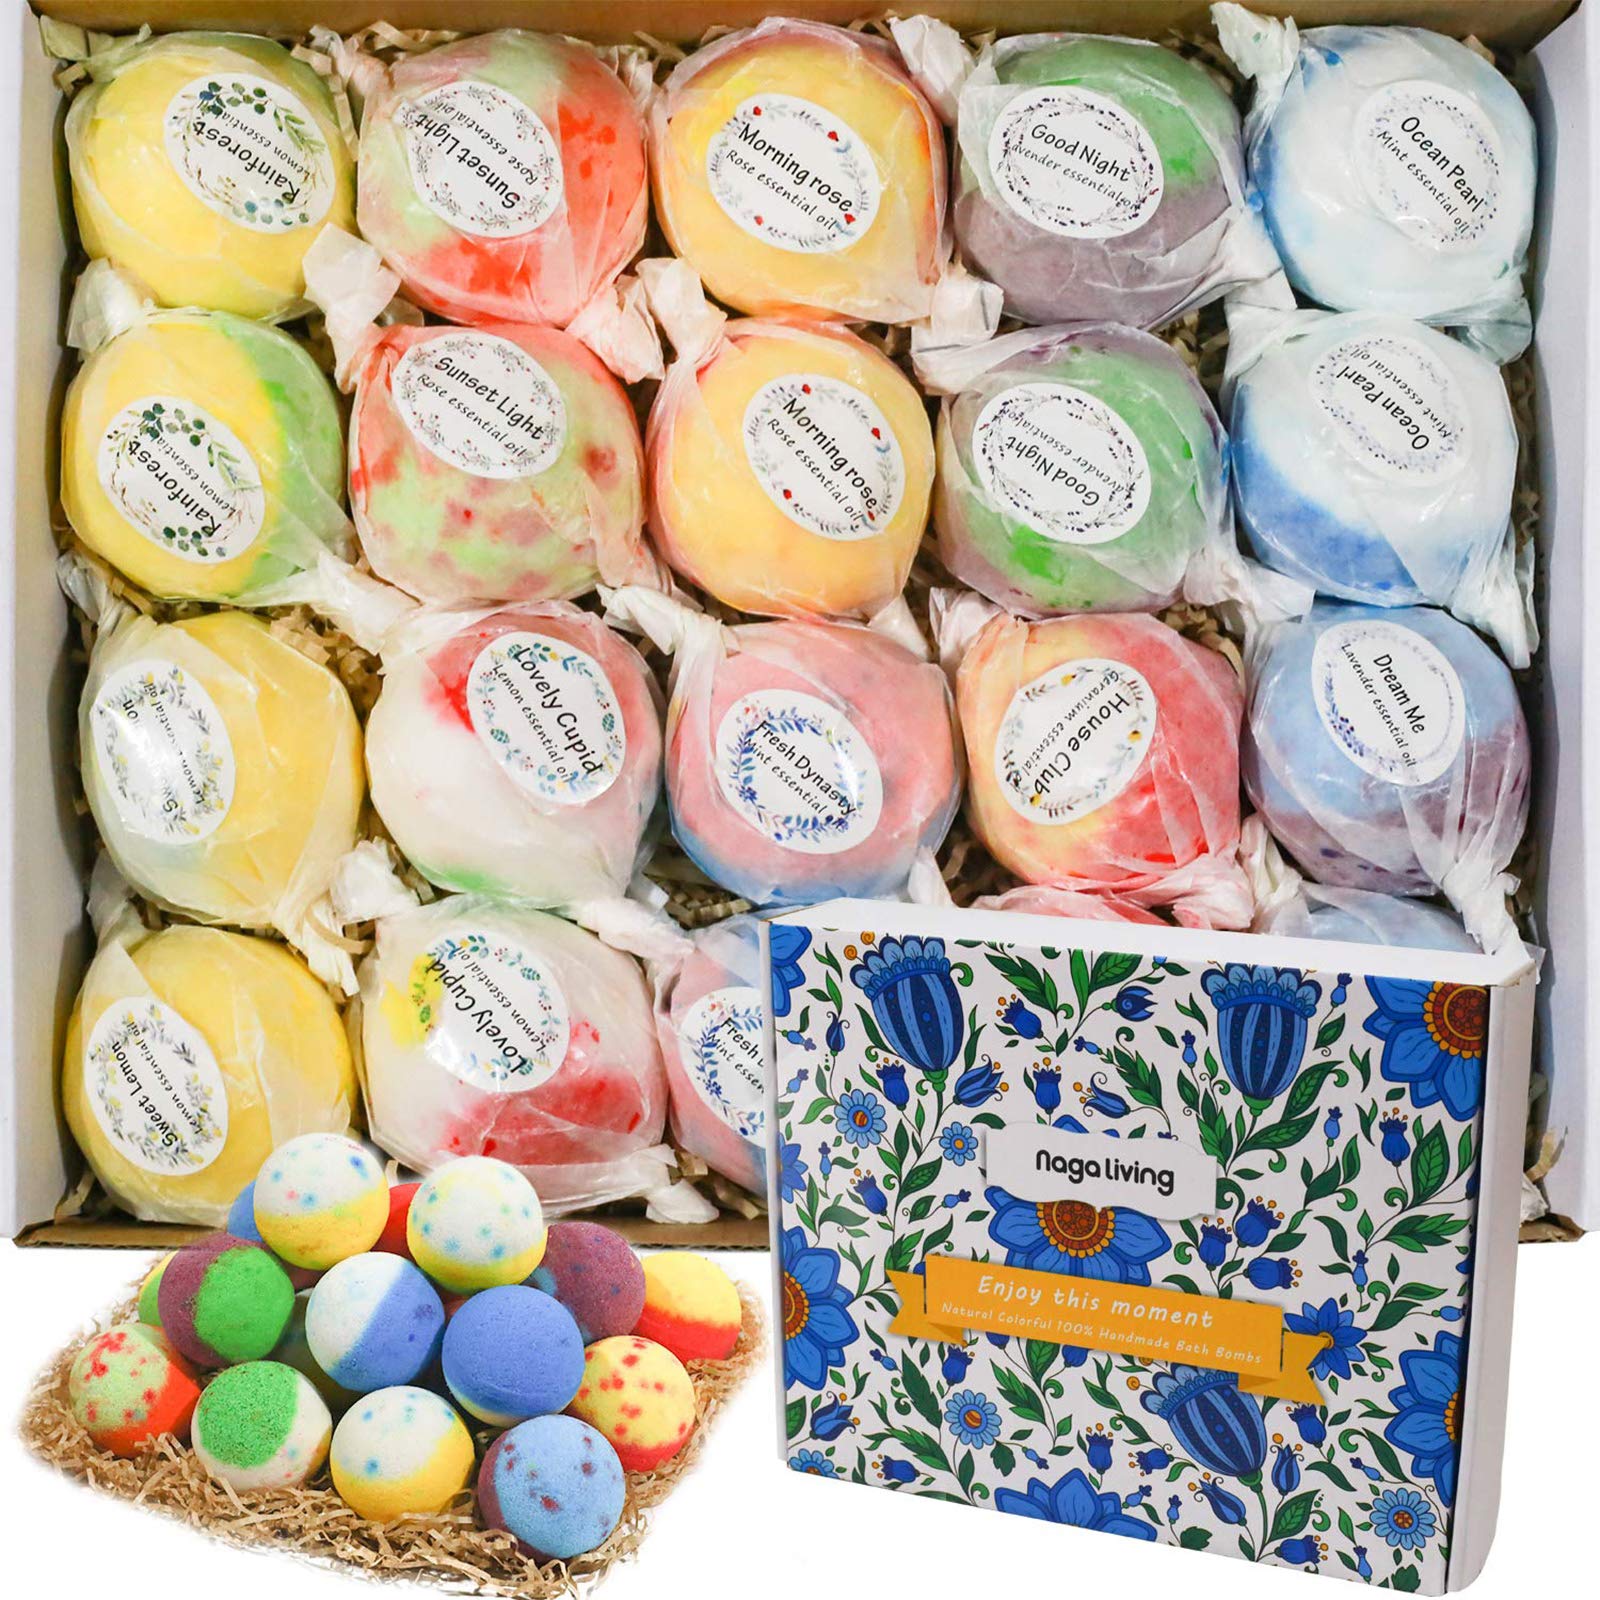 Nagaliving Bath Bombs gift Set, 20 Wonderful Fizz Effect Handmade Bath Bombs for ValentineAs Day, christmas, MotherAs Day, Fathe